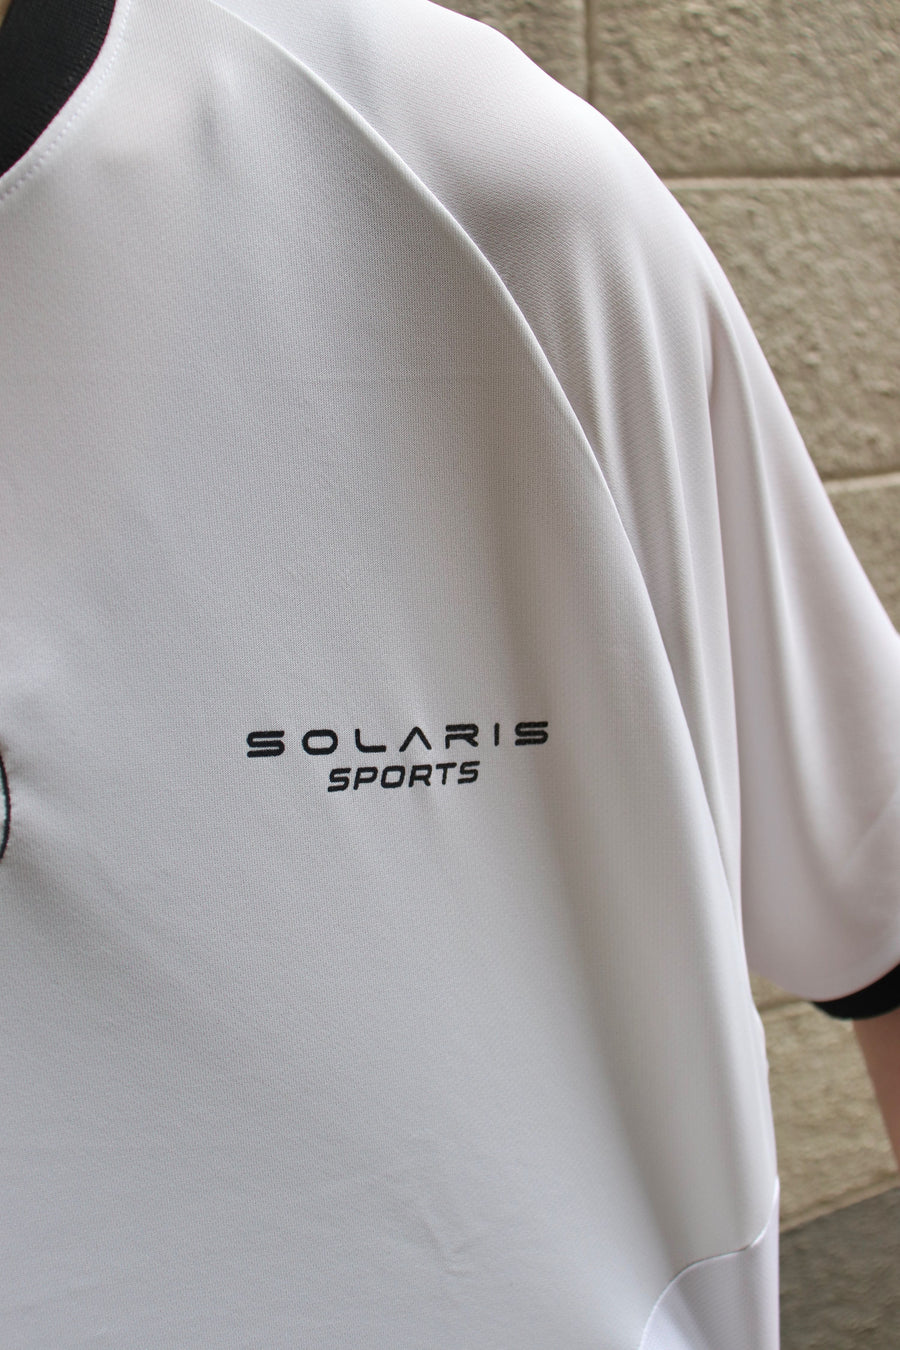 SOLARIS SPORTS  S/S FOOTBALL SHIRT